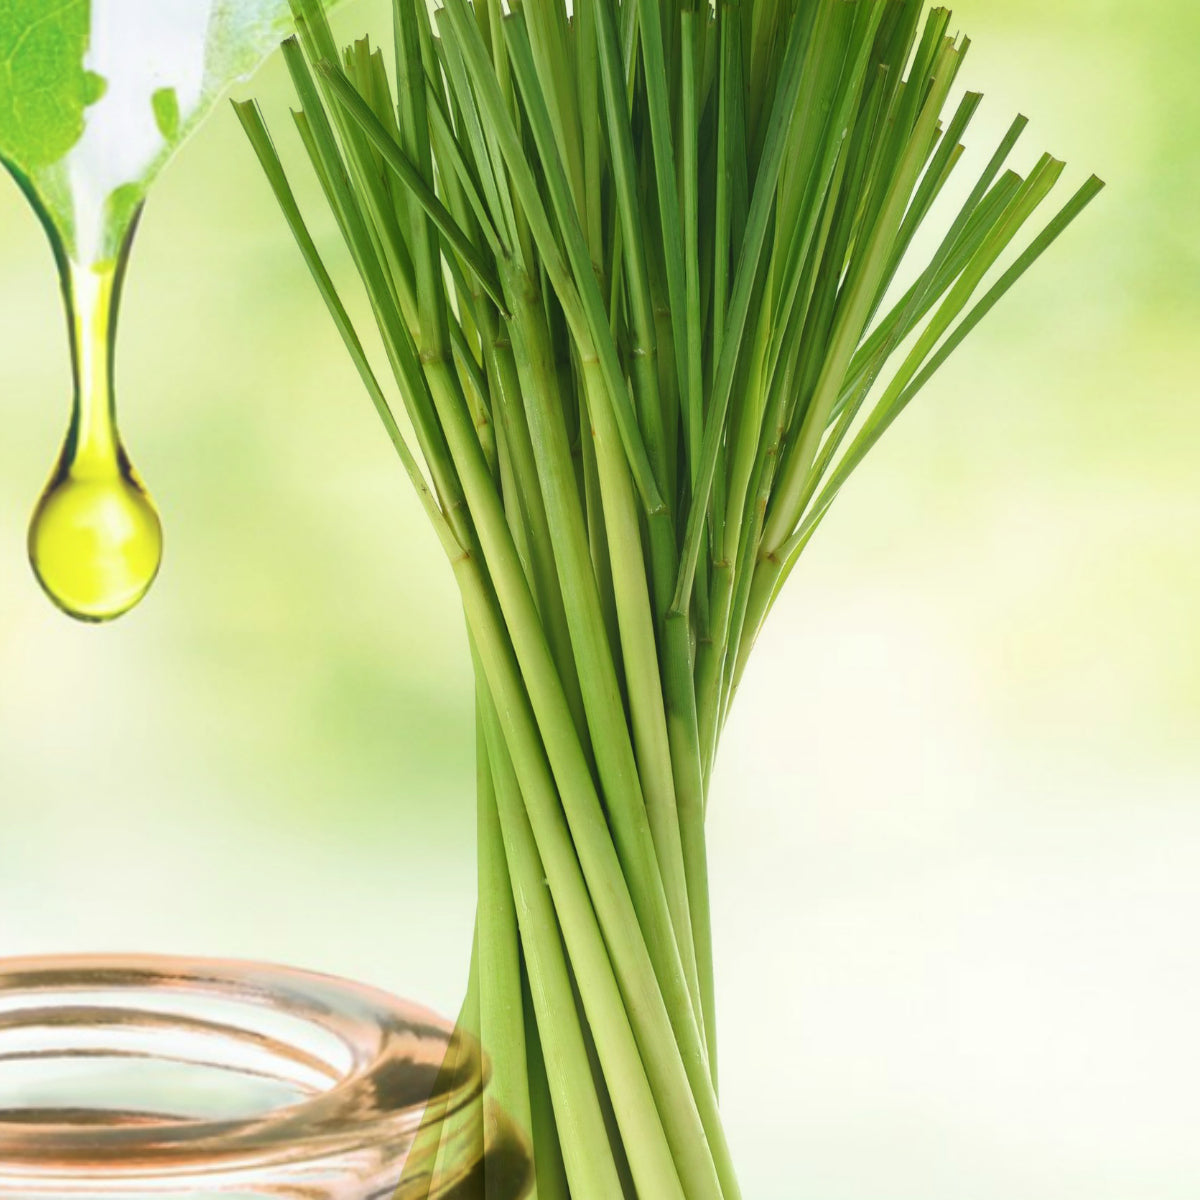 Seed Face Body Lip Care offers pure lemongrass essential oils